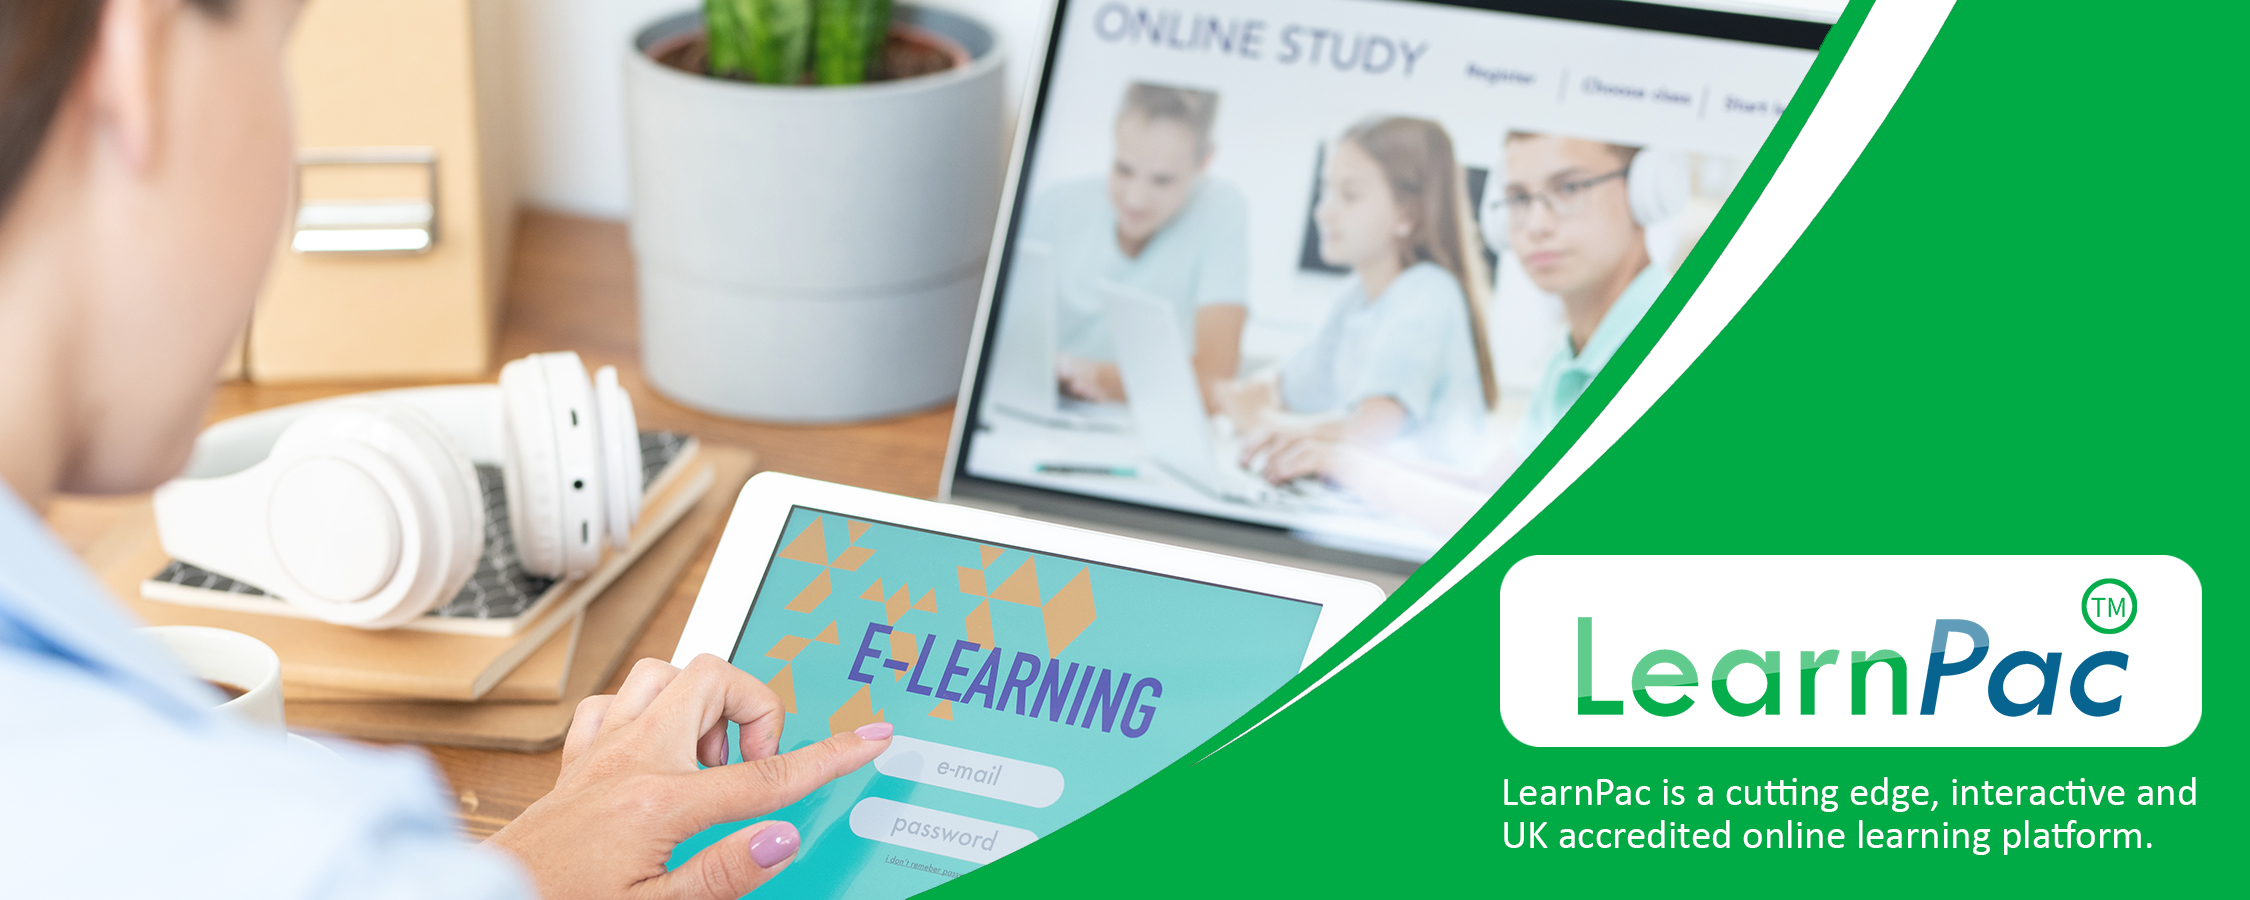 Adult Learning – Physical Skills Training - Online Learning Courses - E-Learning Courses - LearnPac Systems UK -